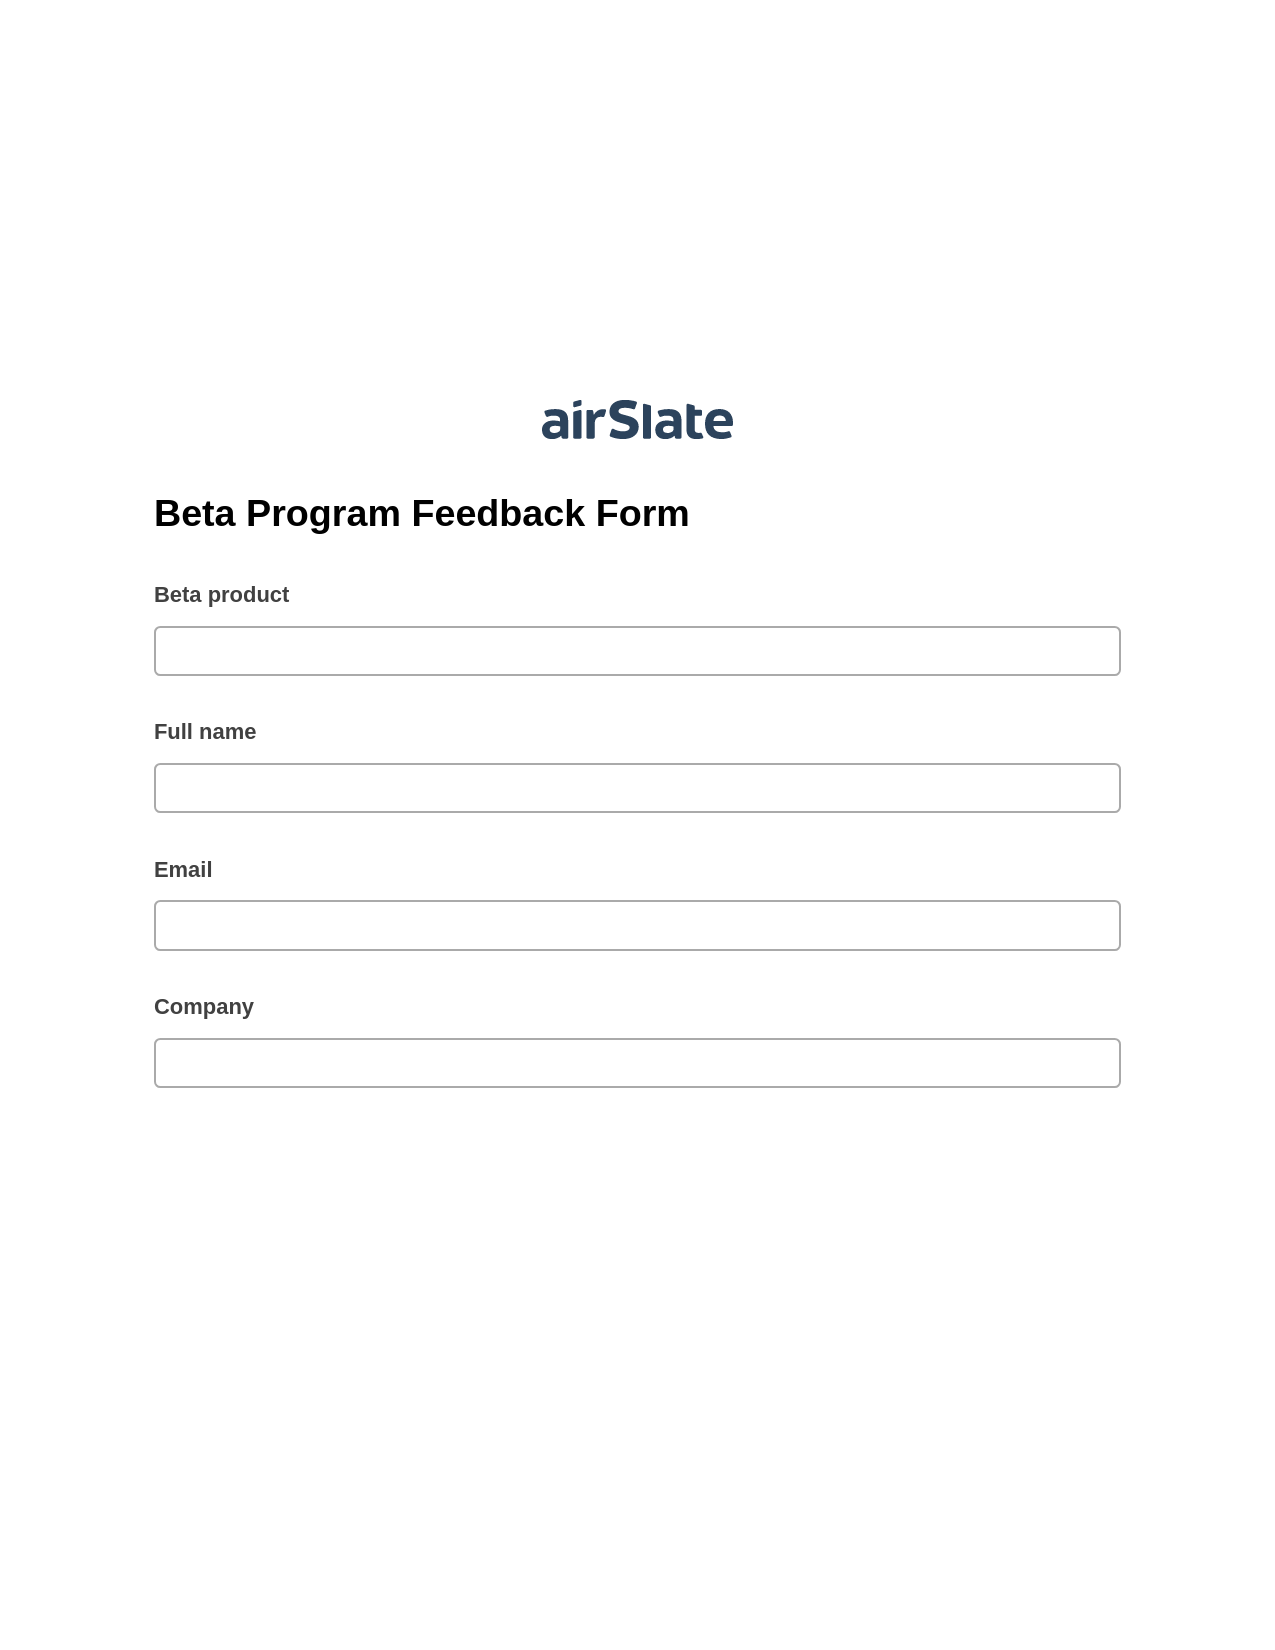 Multirole Beta Program Feedback Form Pre-fill from CSV File Bot, Send Mailchimp Campaign Bot, Email Notification Postfinish Bot